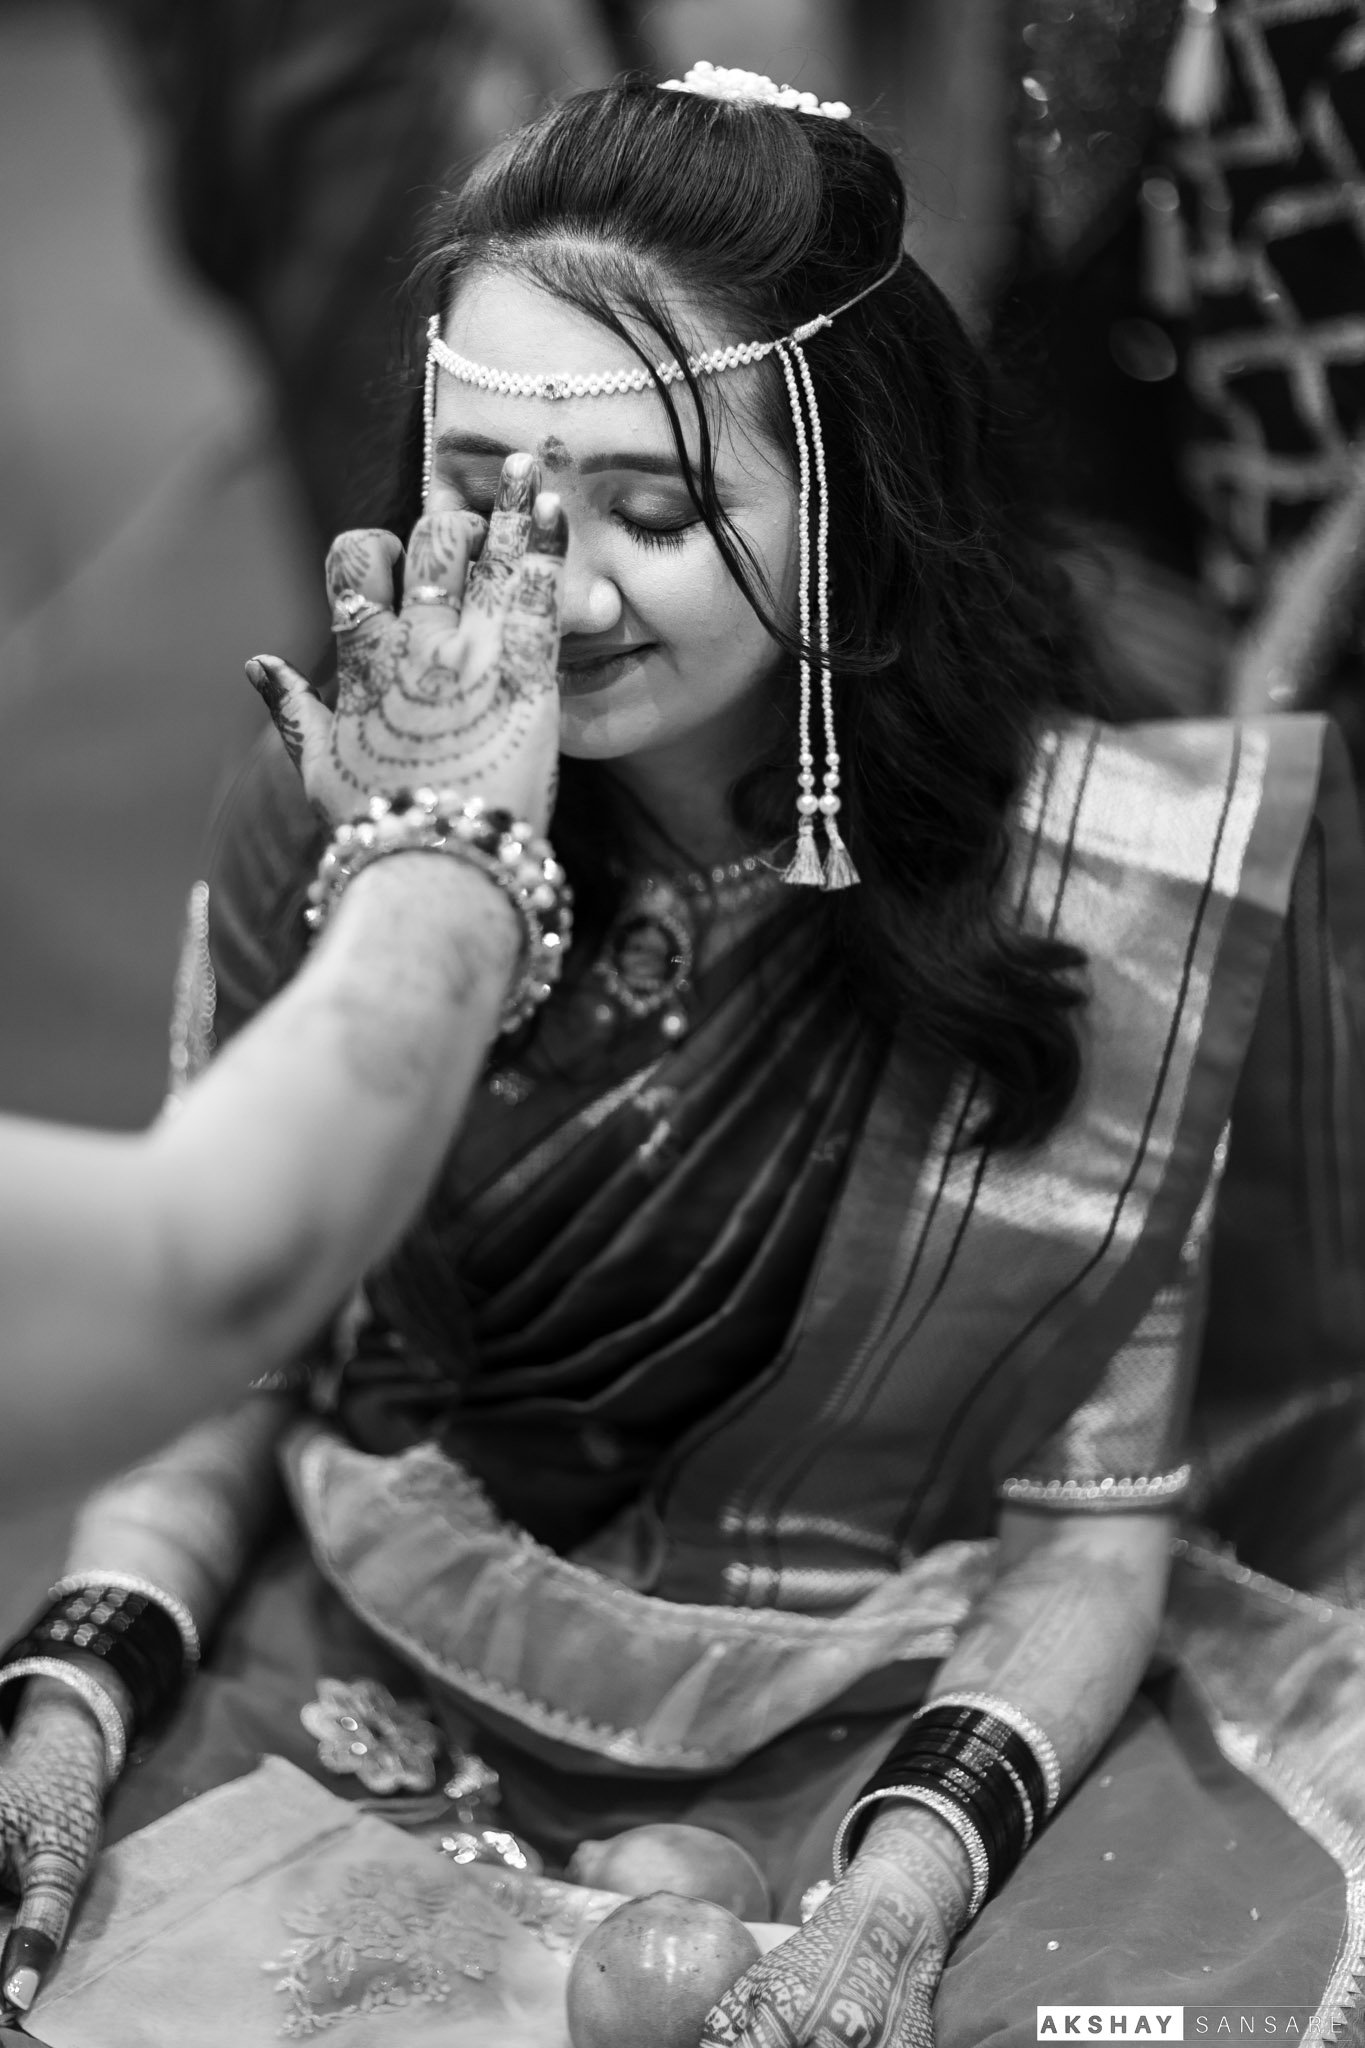 Chinmayee x Nikhil compress | Akshay Sansare Photography -5.jpg